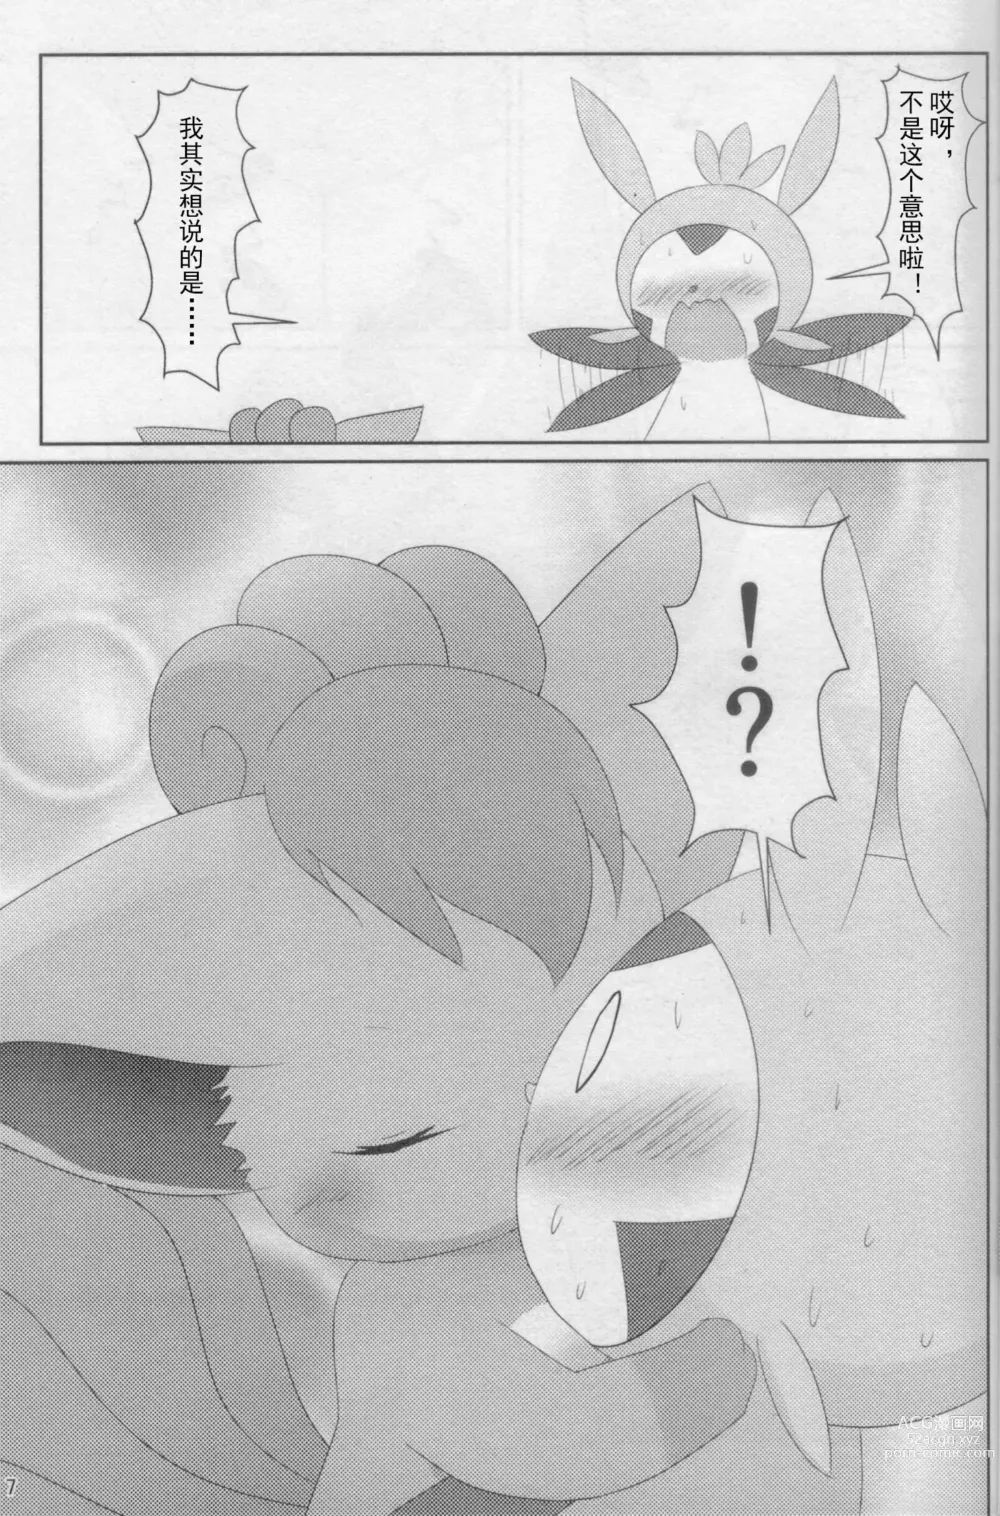 Page 7 of doujinshi 和姐姐一起做愉快的事情哦♡